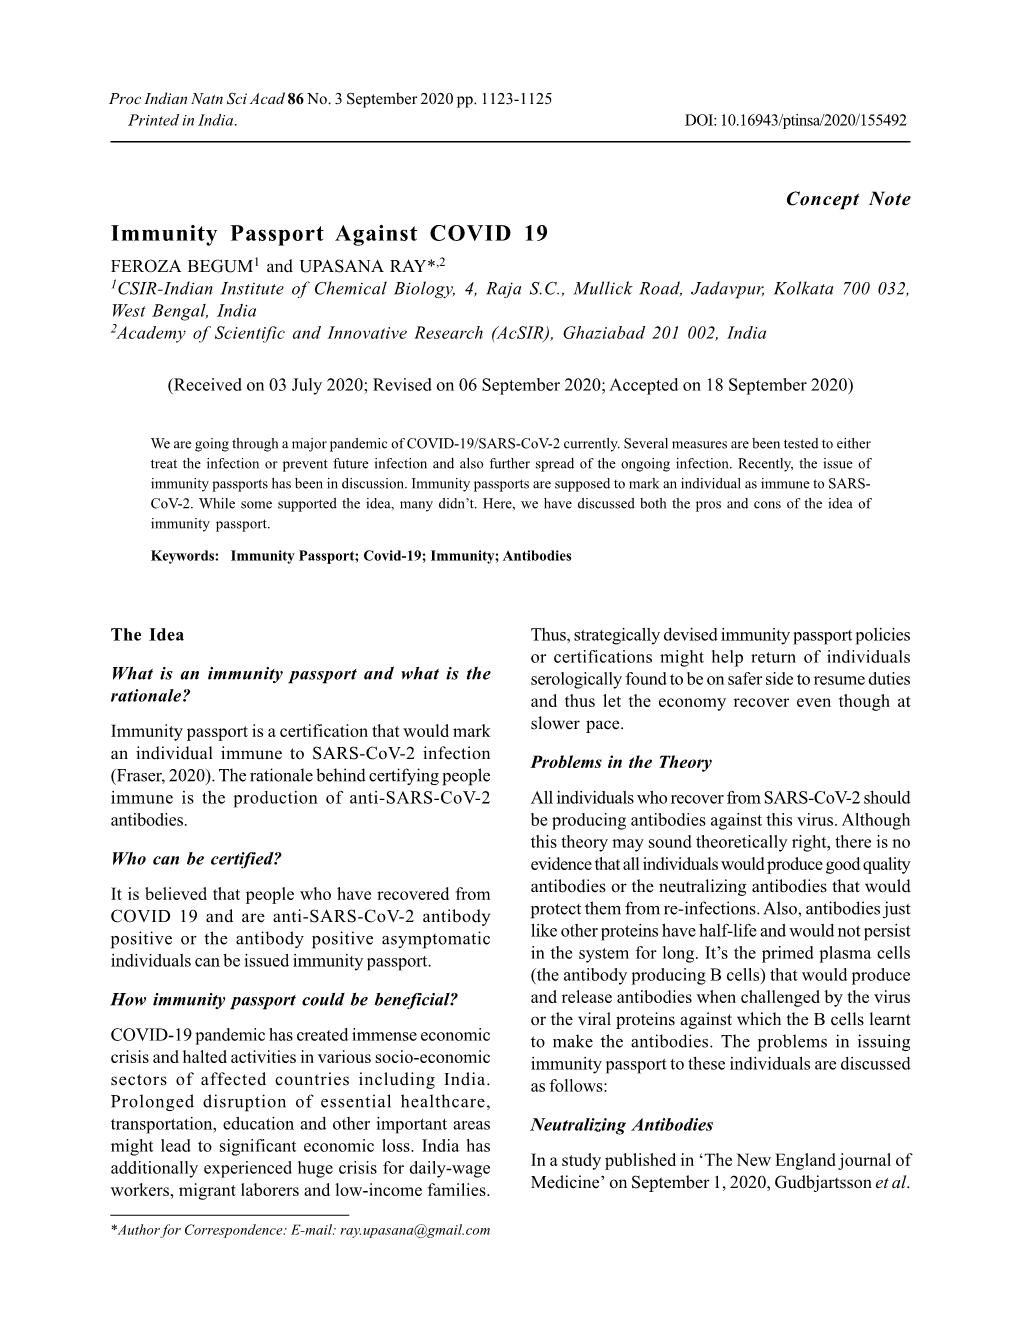 Immunity Passport Against COVID 19